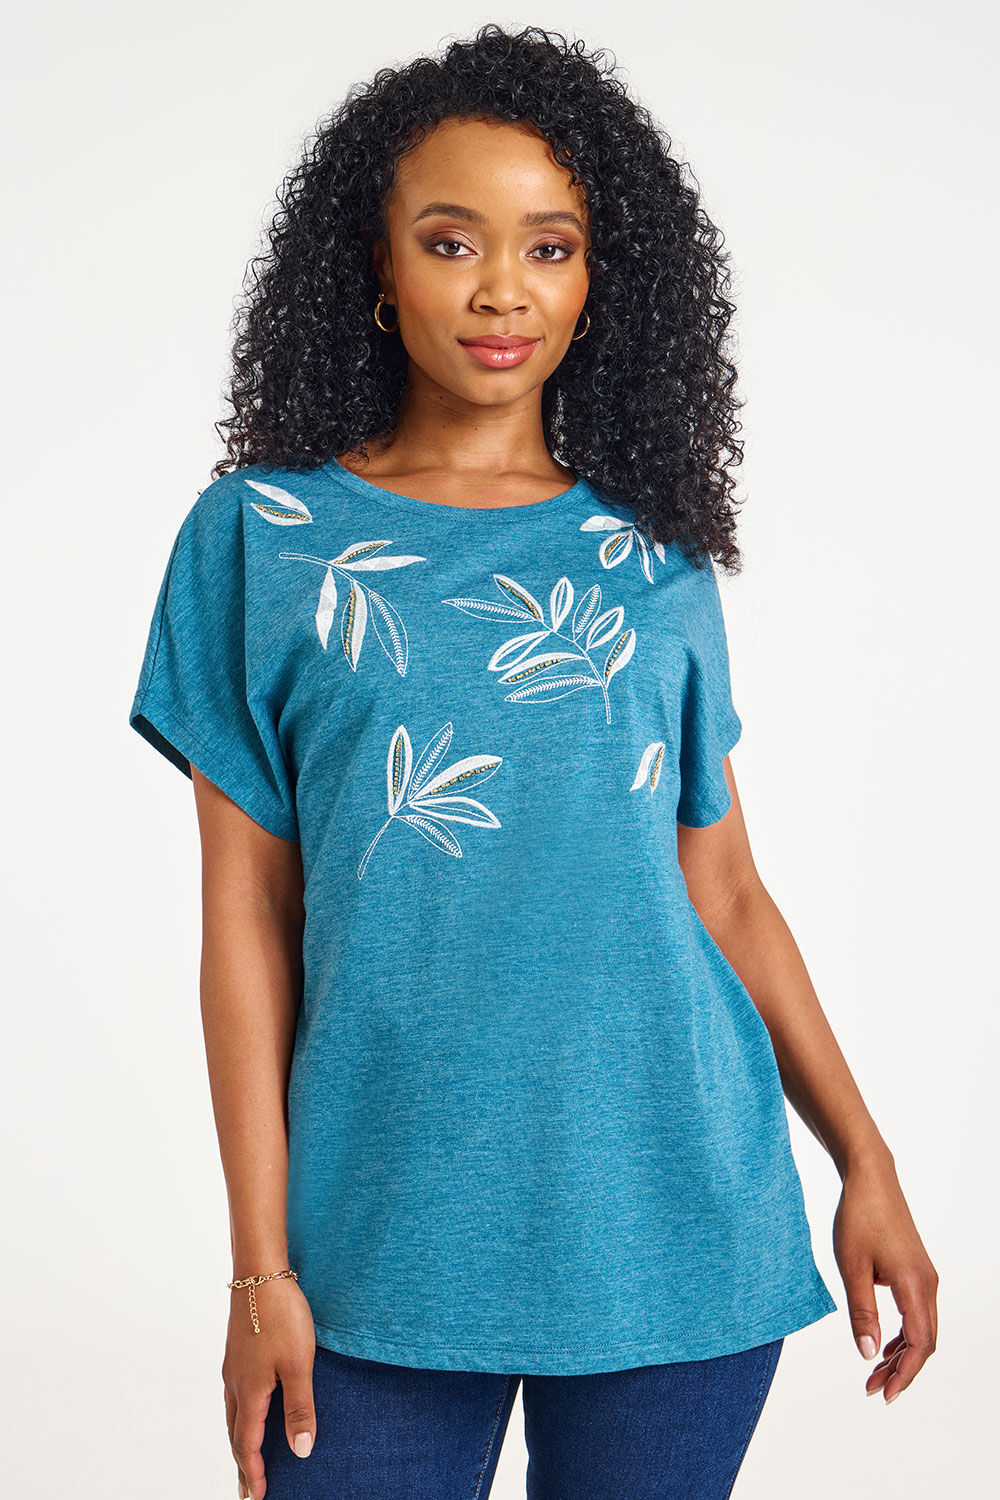 Bonmarche Teal Short Sleeve Embroidered Beaded Leaf Design T-Shirt, Size: 10